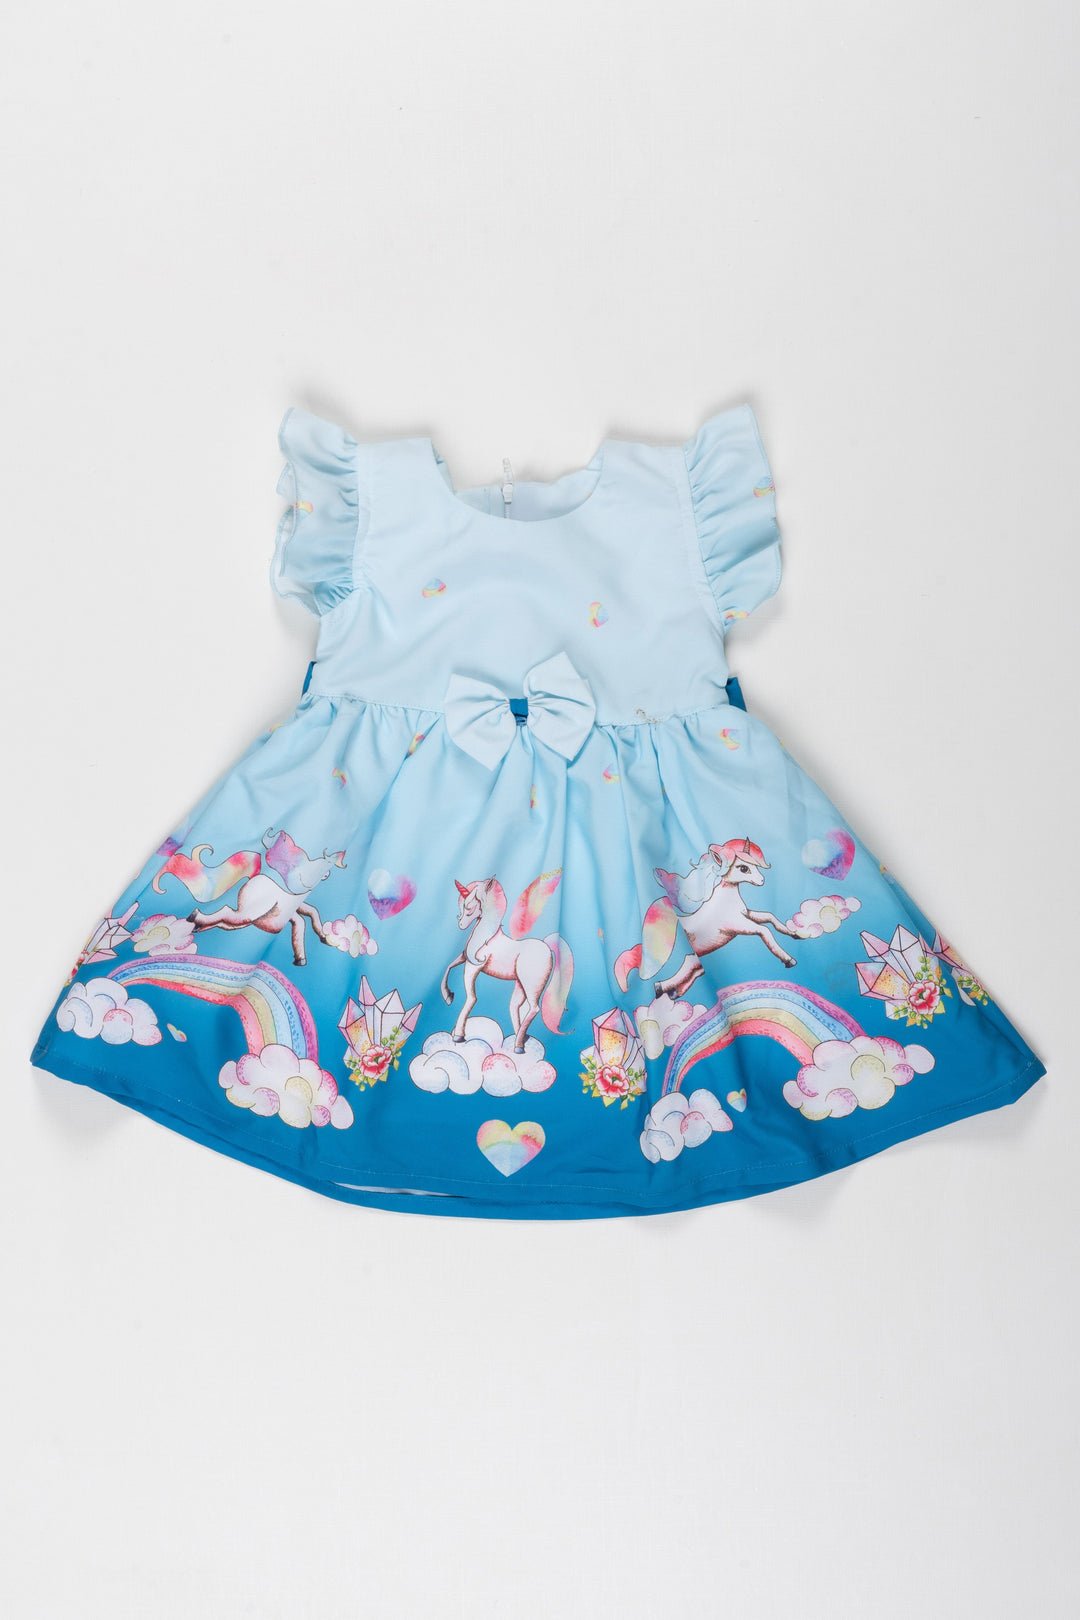 The Nesavu Baby Fancy Frock Toddler Girl's Enchanted Unicorn and Rainbow Dress with Bow Detail Nesavu 14 (6M) / Blue / Poly Crepe BFJ539B-14 Charming Unicorn Rainbow Dress for Toddlers | A Fairytale Ensemble | The Nesavu